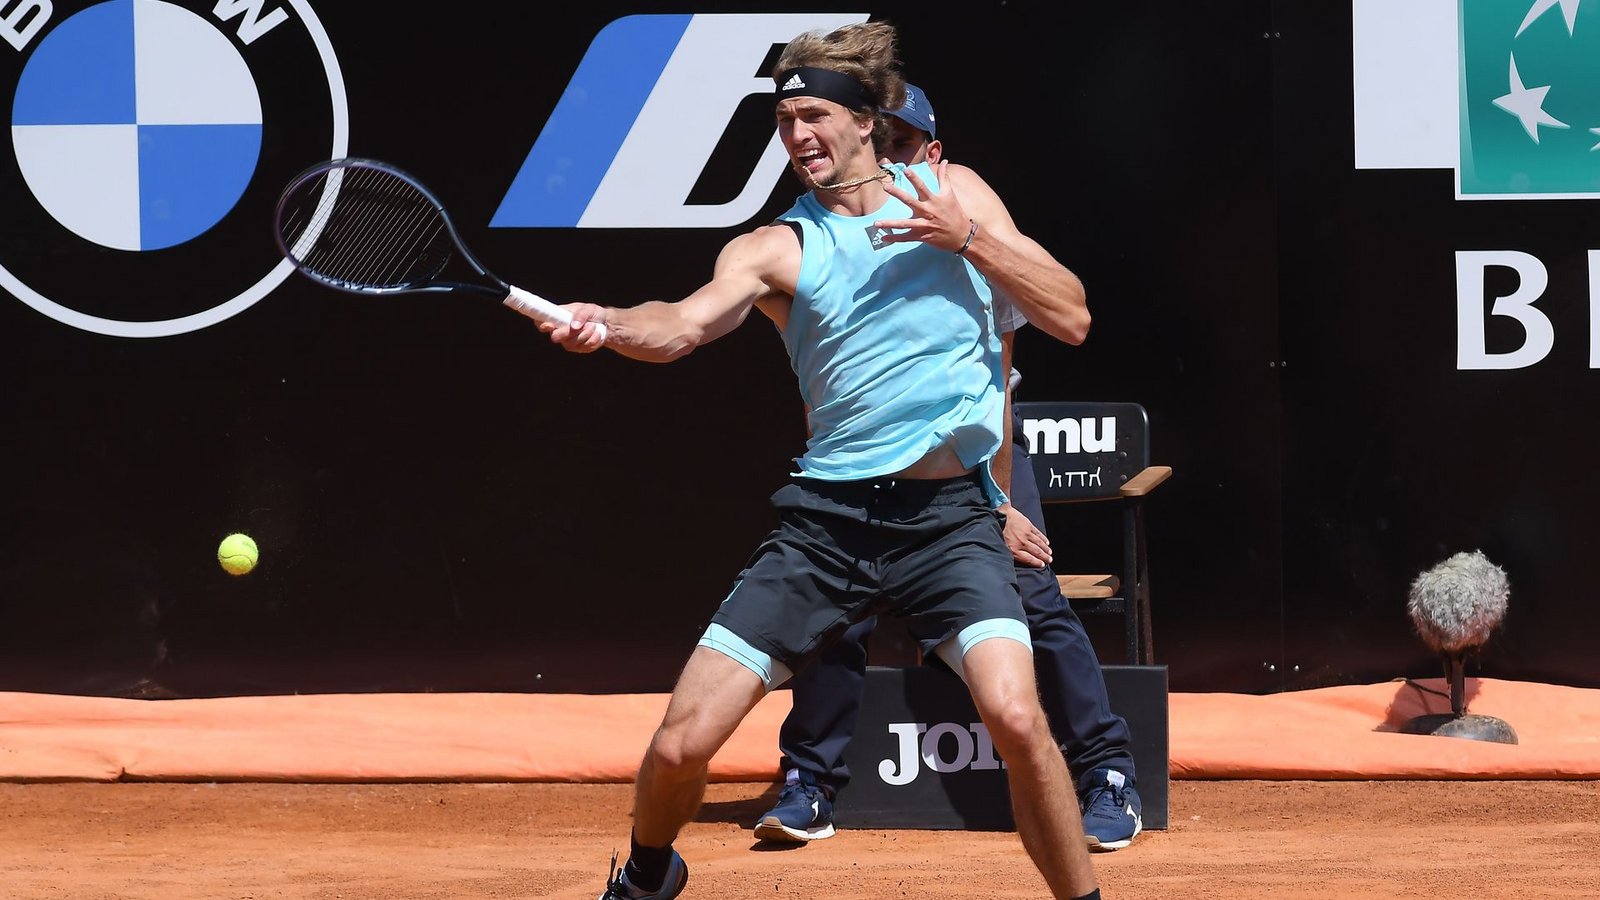 Steht beim ATP-Turnier von Rom im Viertelfinale: Alexander Zverev.Foto: Massimo Insabato/Mondadori Portfolio via ZUMA/dpa